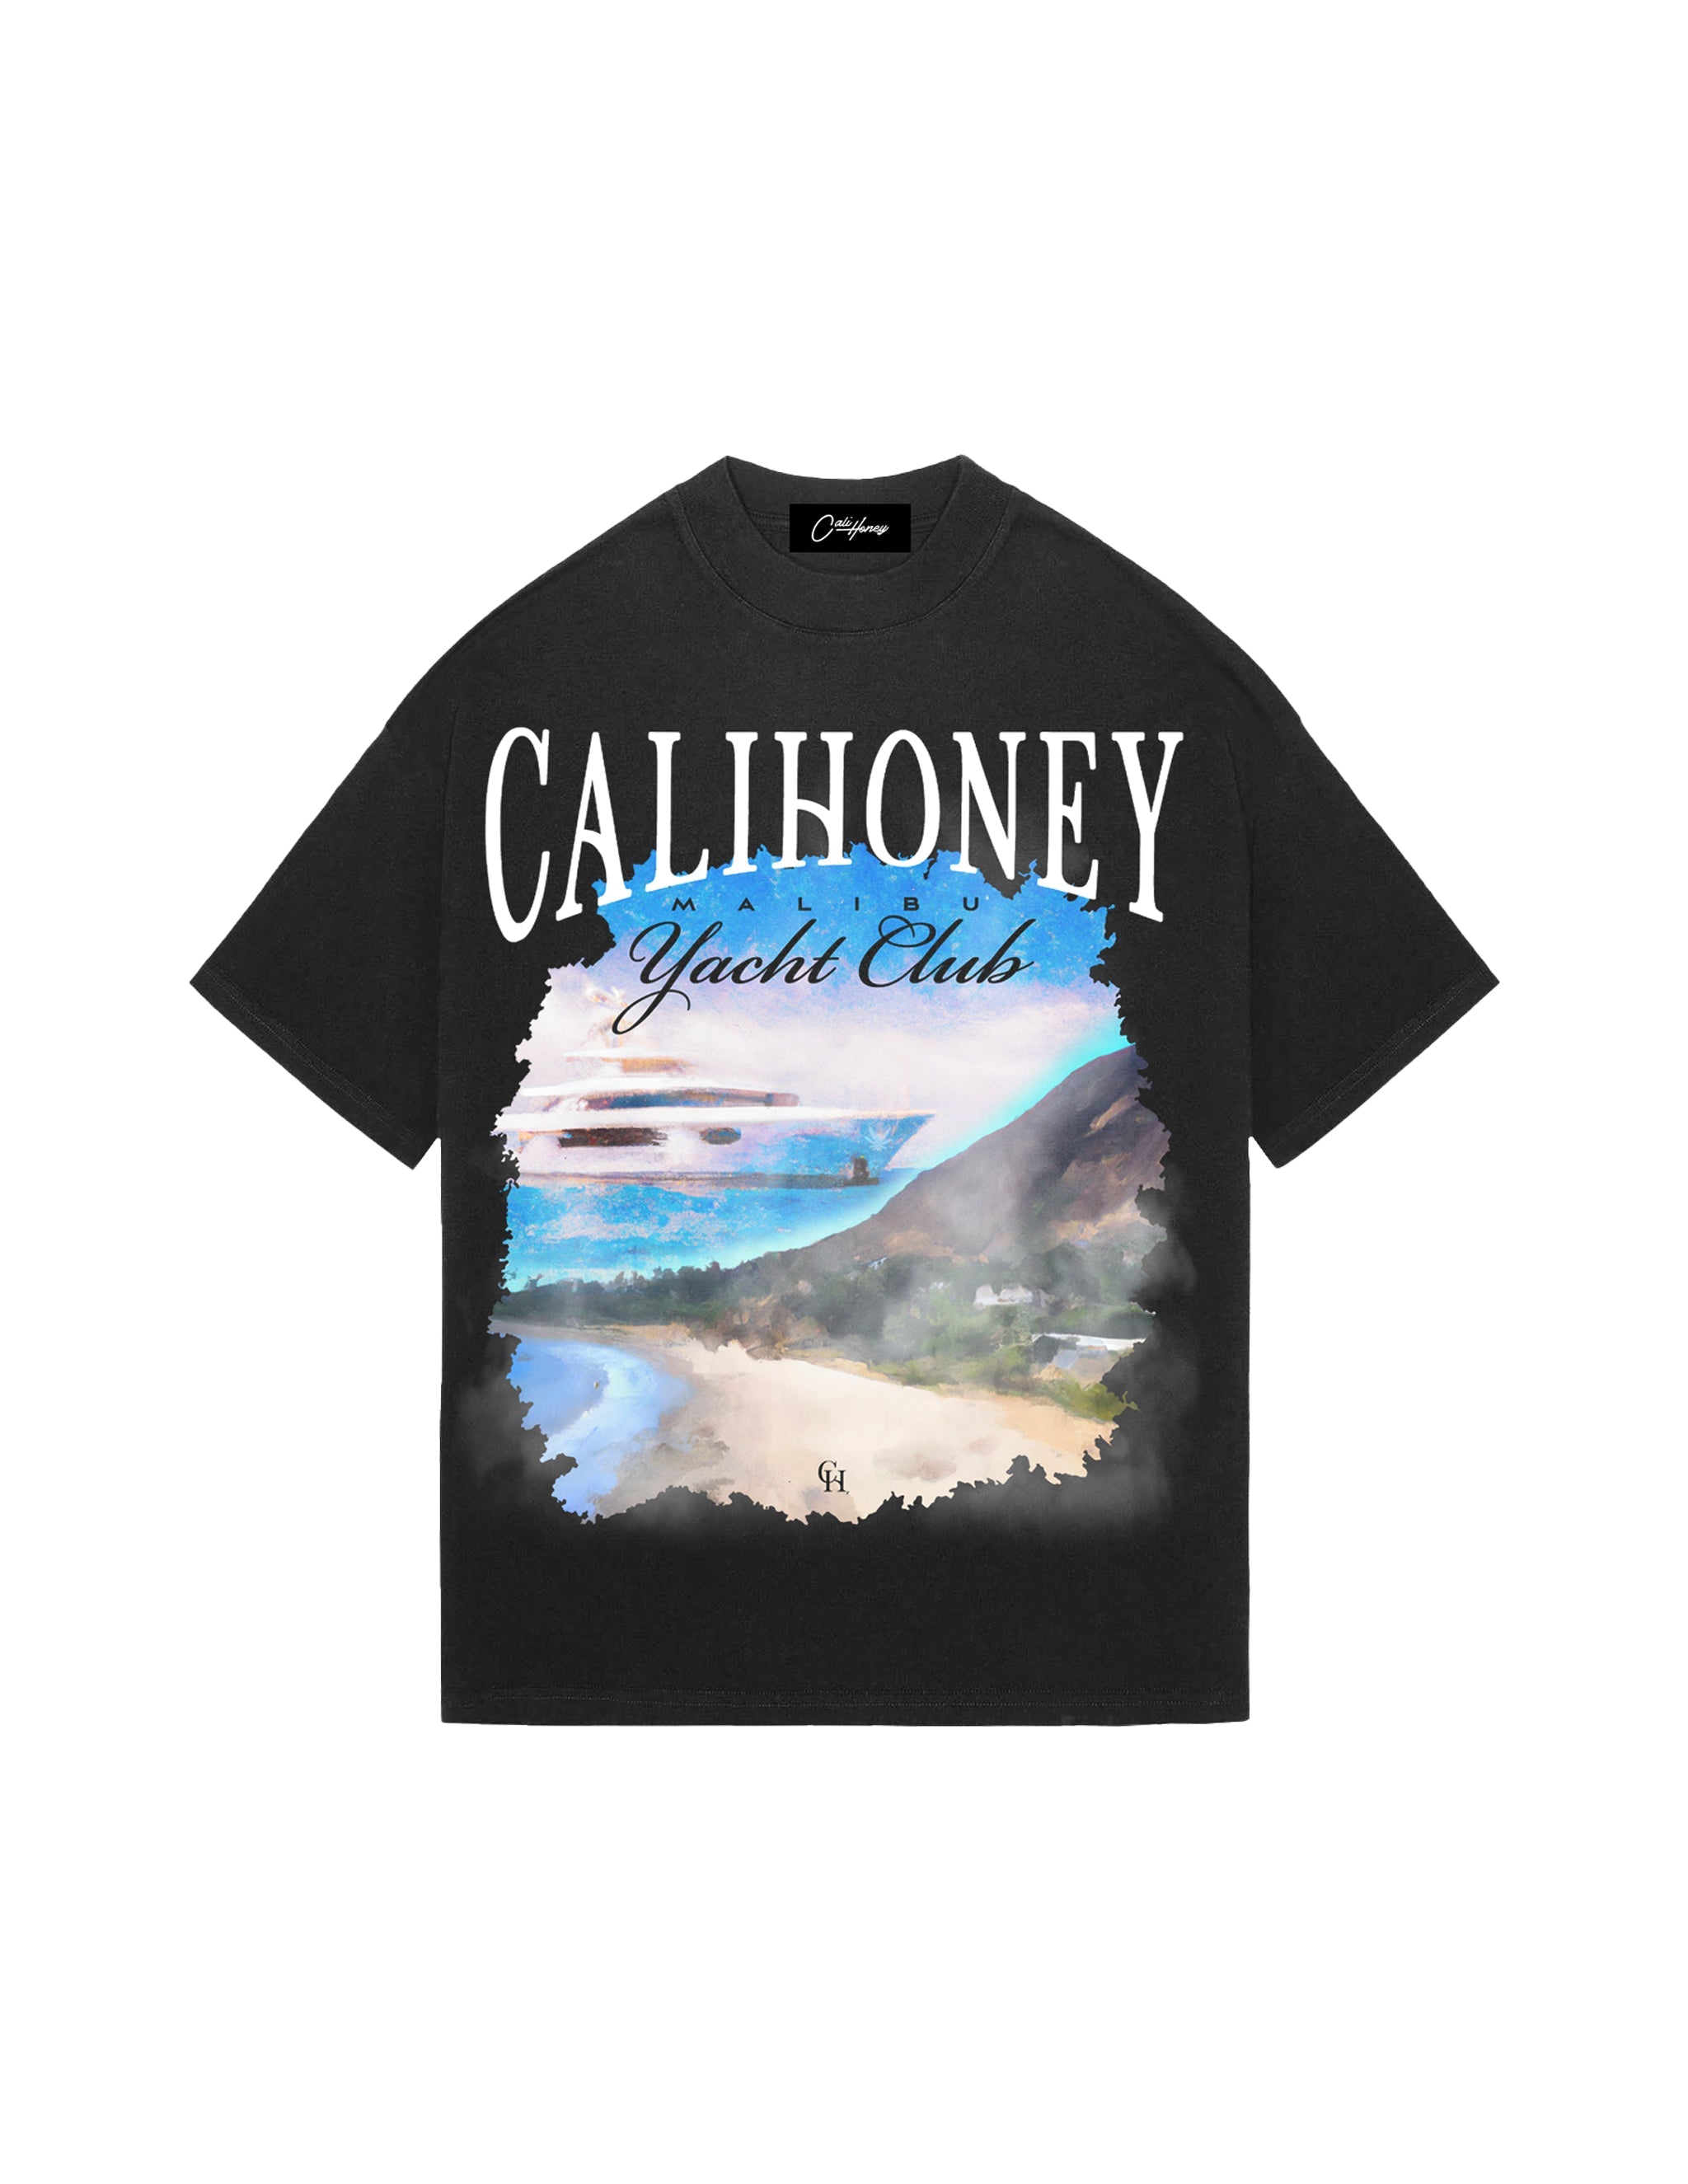 Cali Honey Malibu Yacht Club